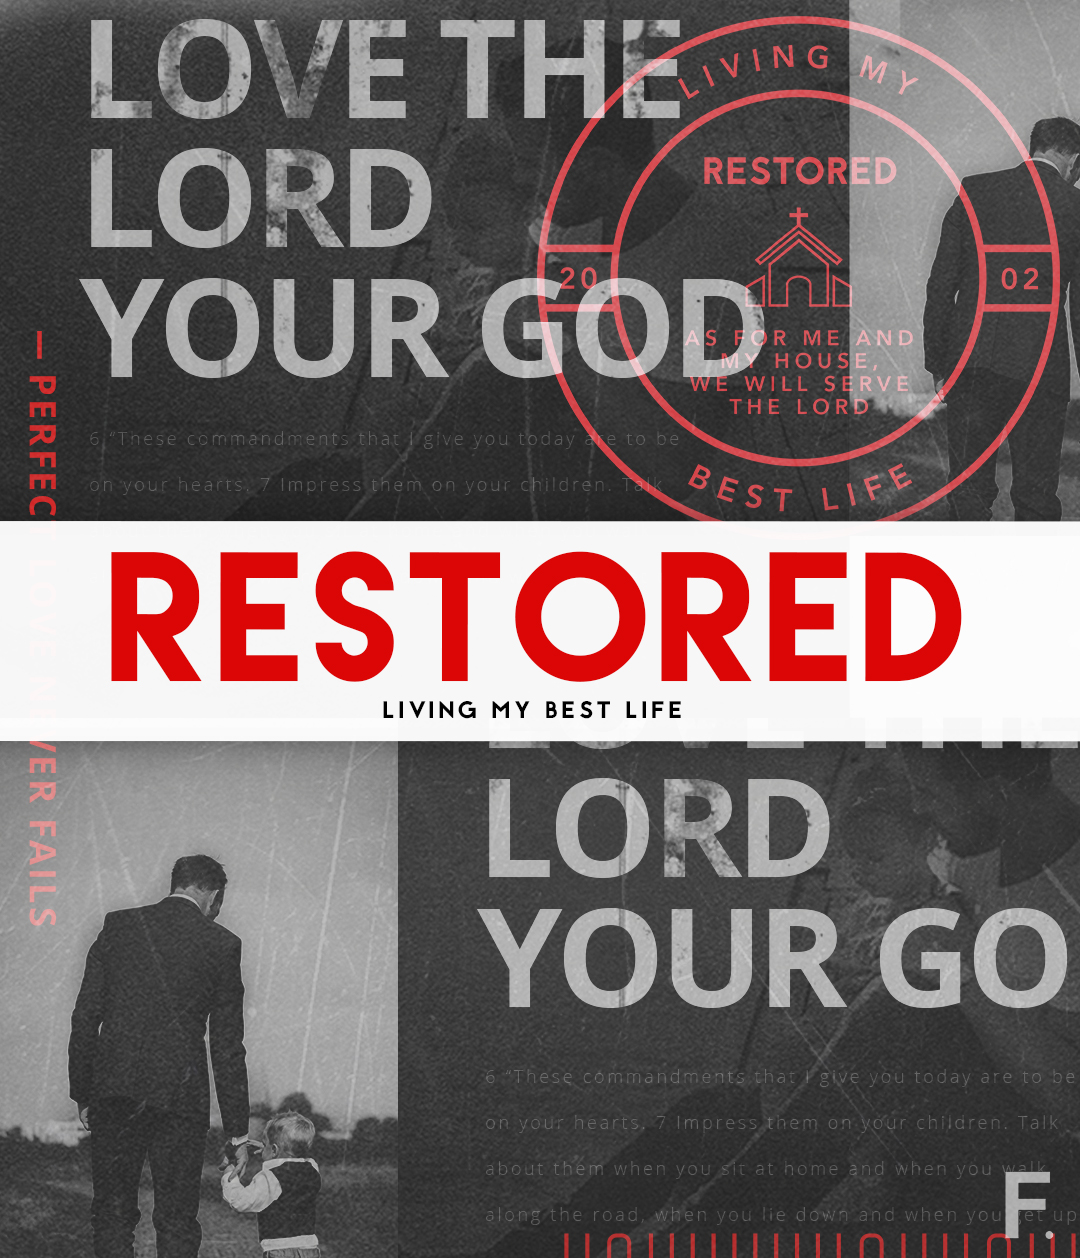 Restored_Insta_Love the Lord.jpg